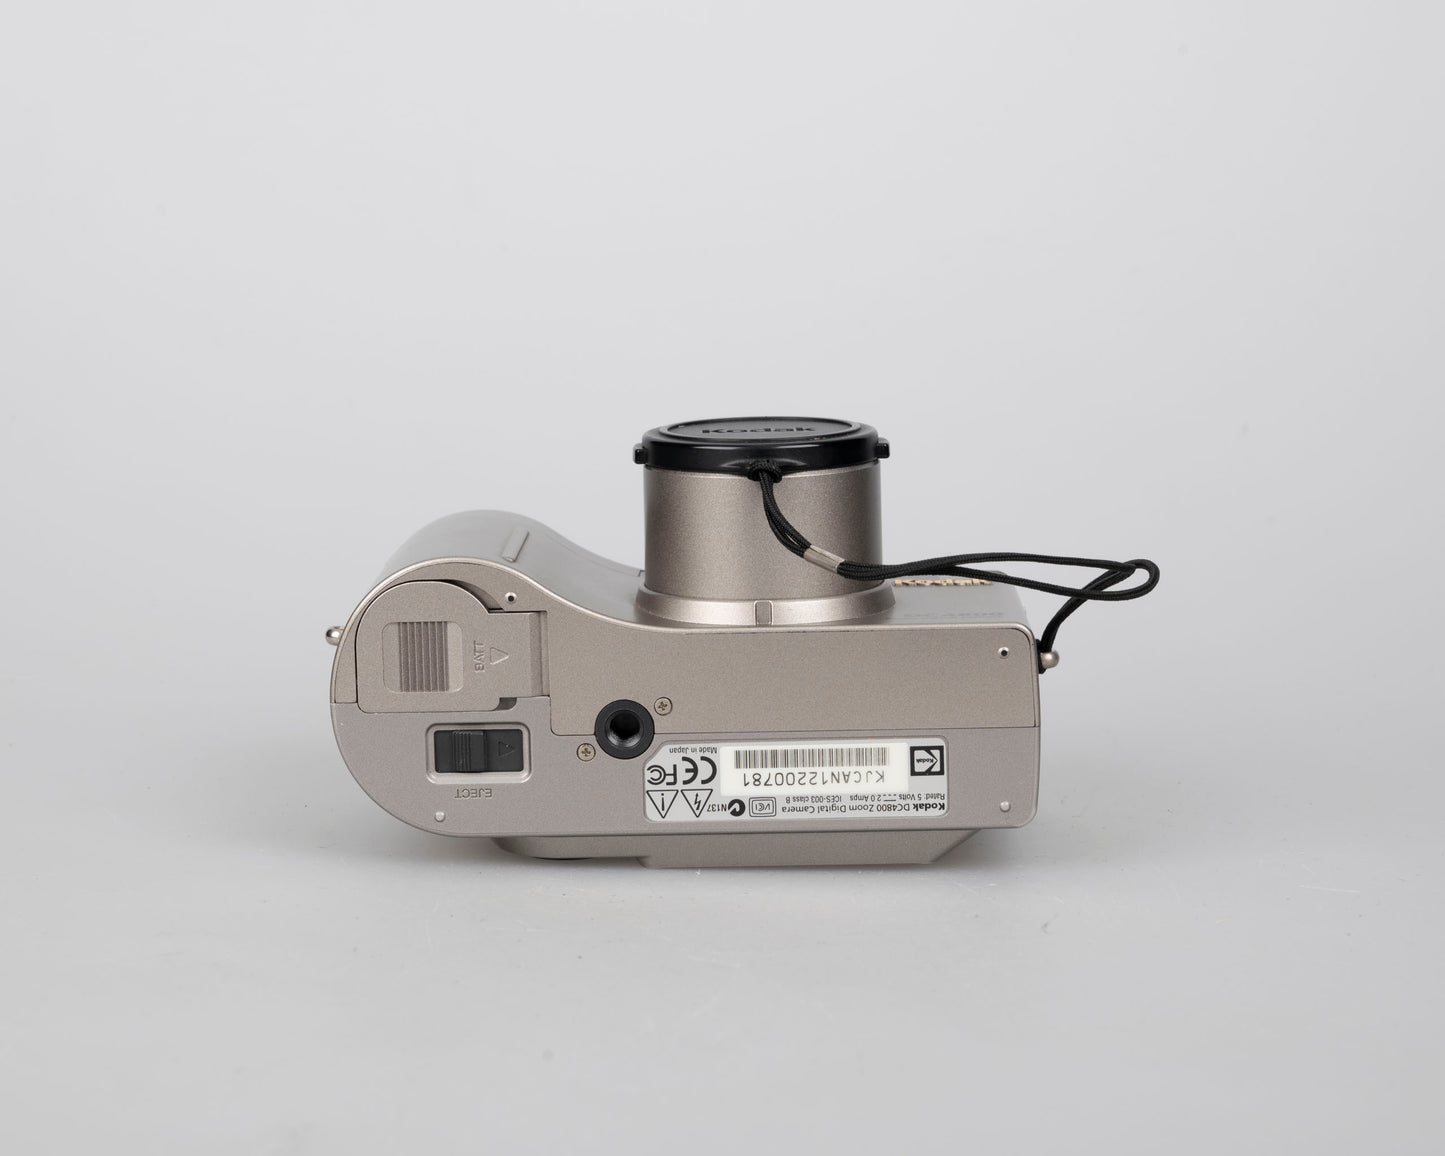 Kodak DC4800 3.1 megapixel CCD digicam w/ 256 MB CF card + battery + charger